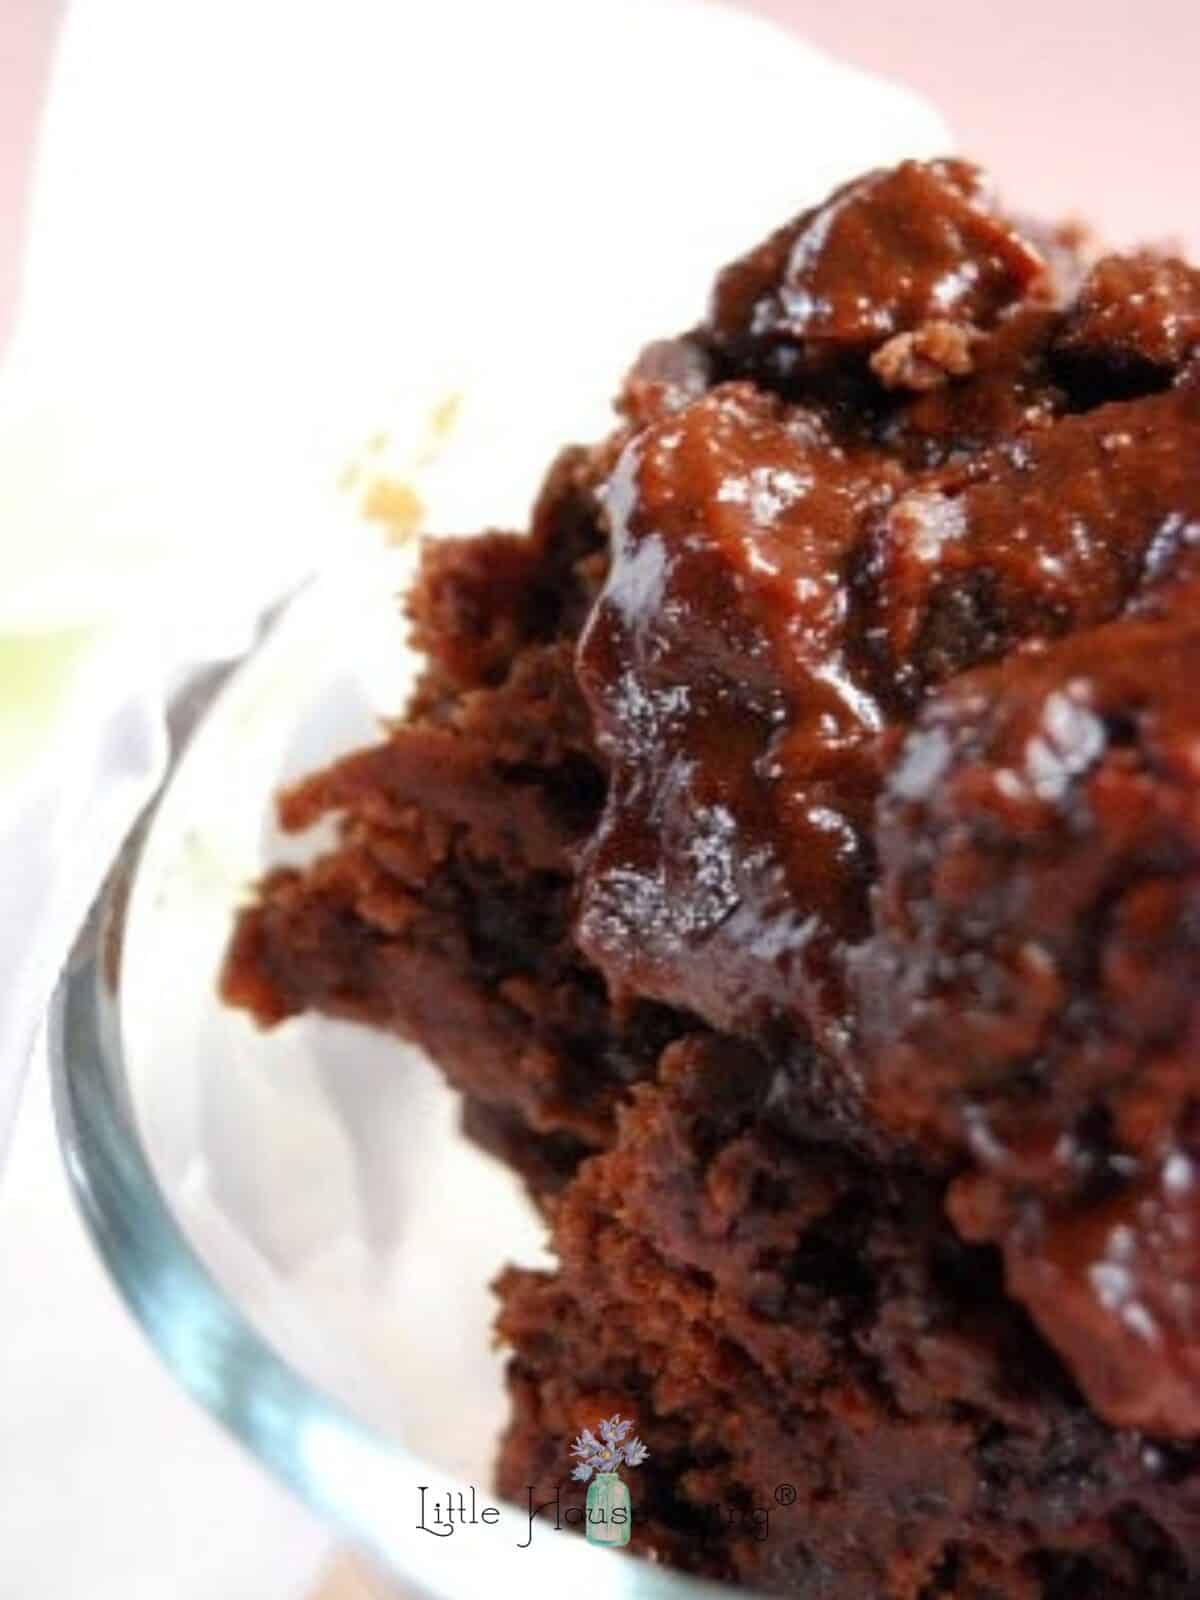 Closeup of chocolate molten lava cake in a glass dish.